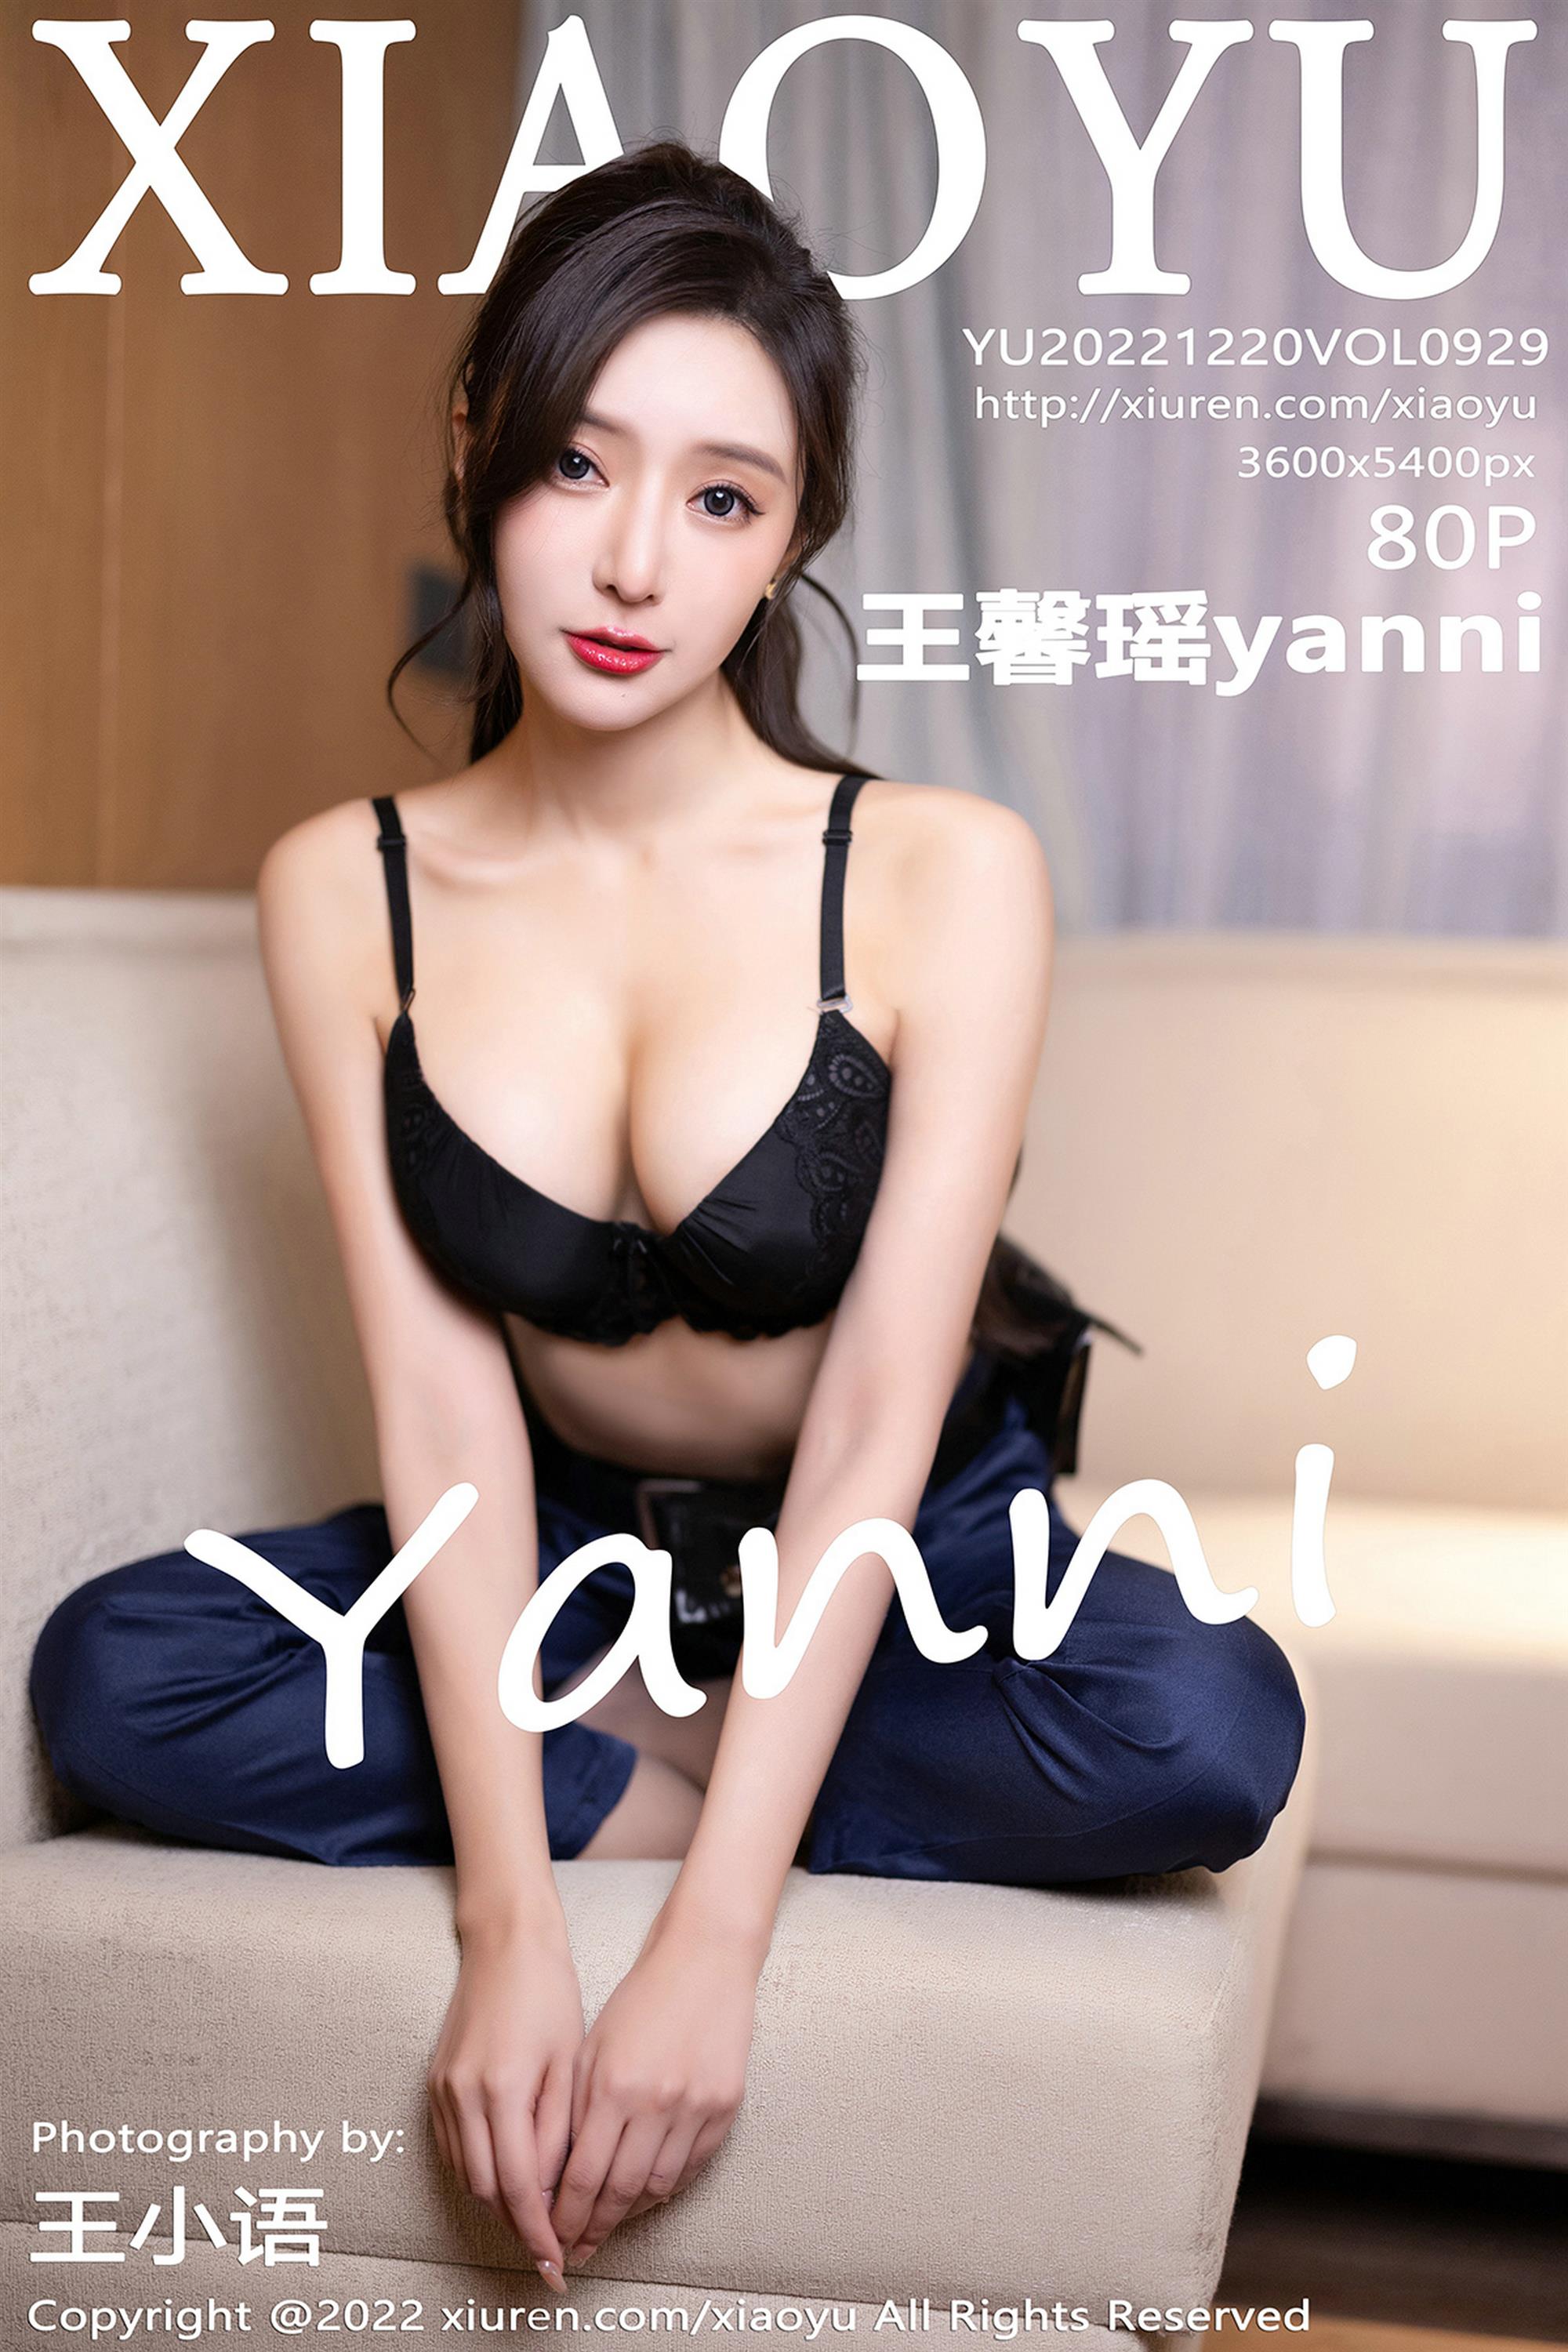 XIAOYU 语画界 2022.12.20 Vol.929 王馨瑶yanni - 81.jpg